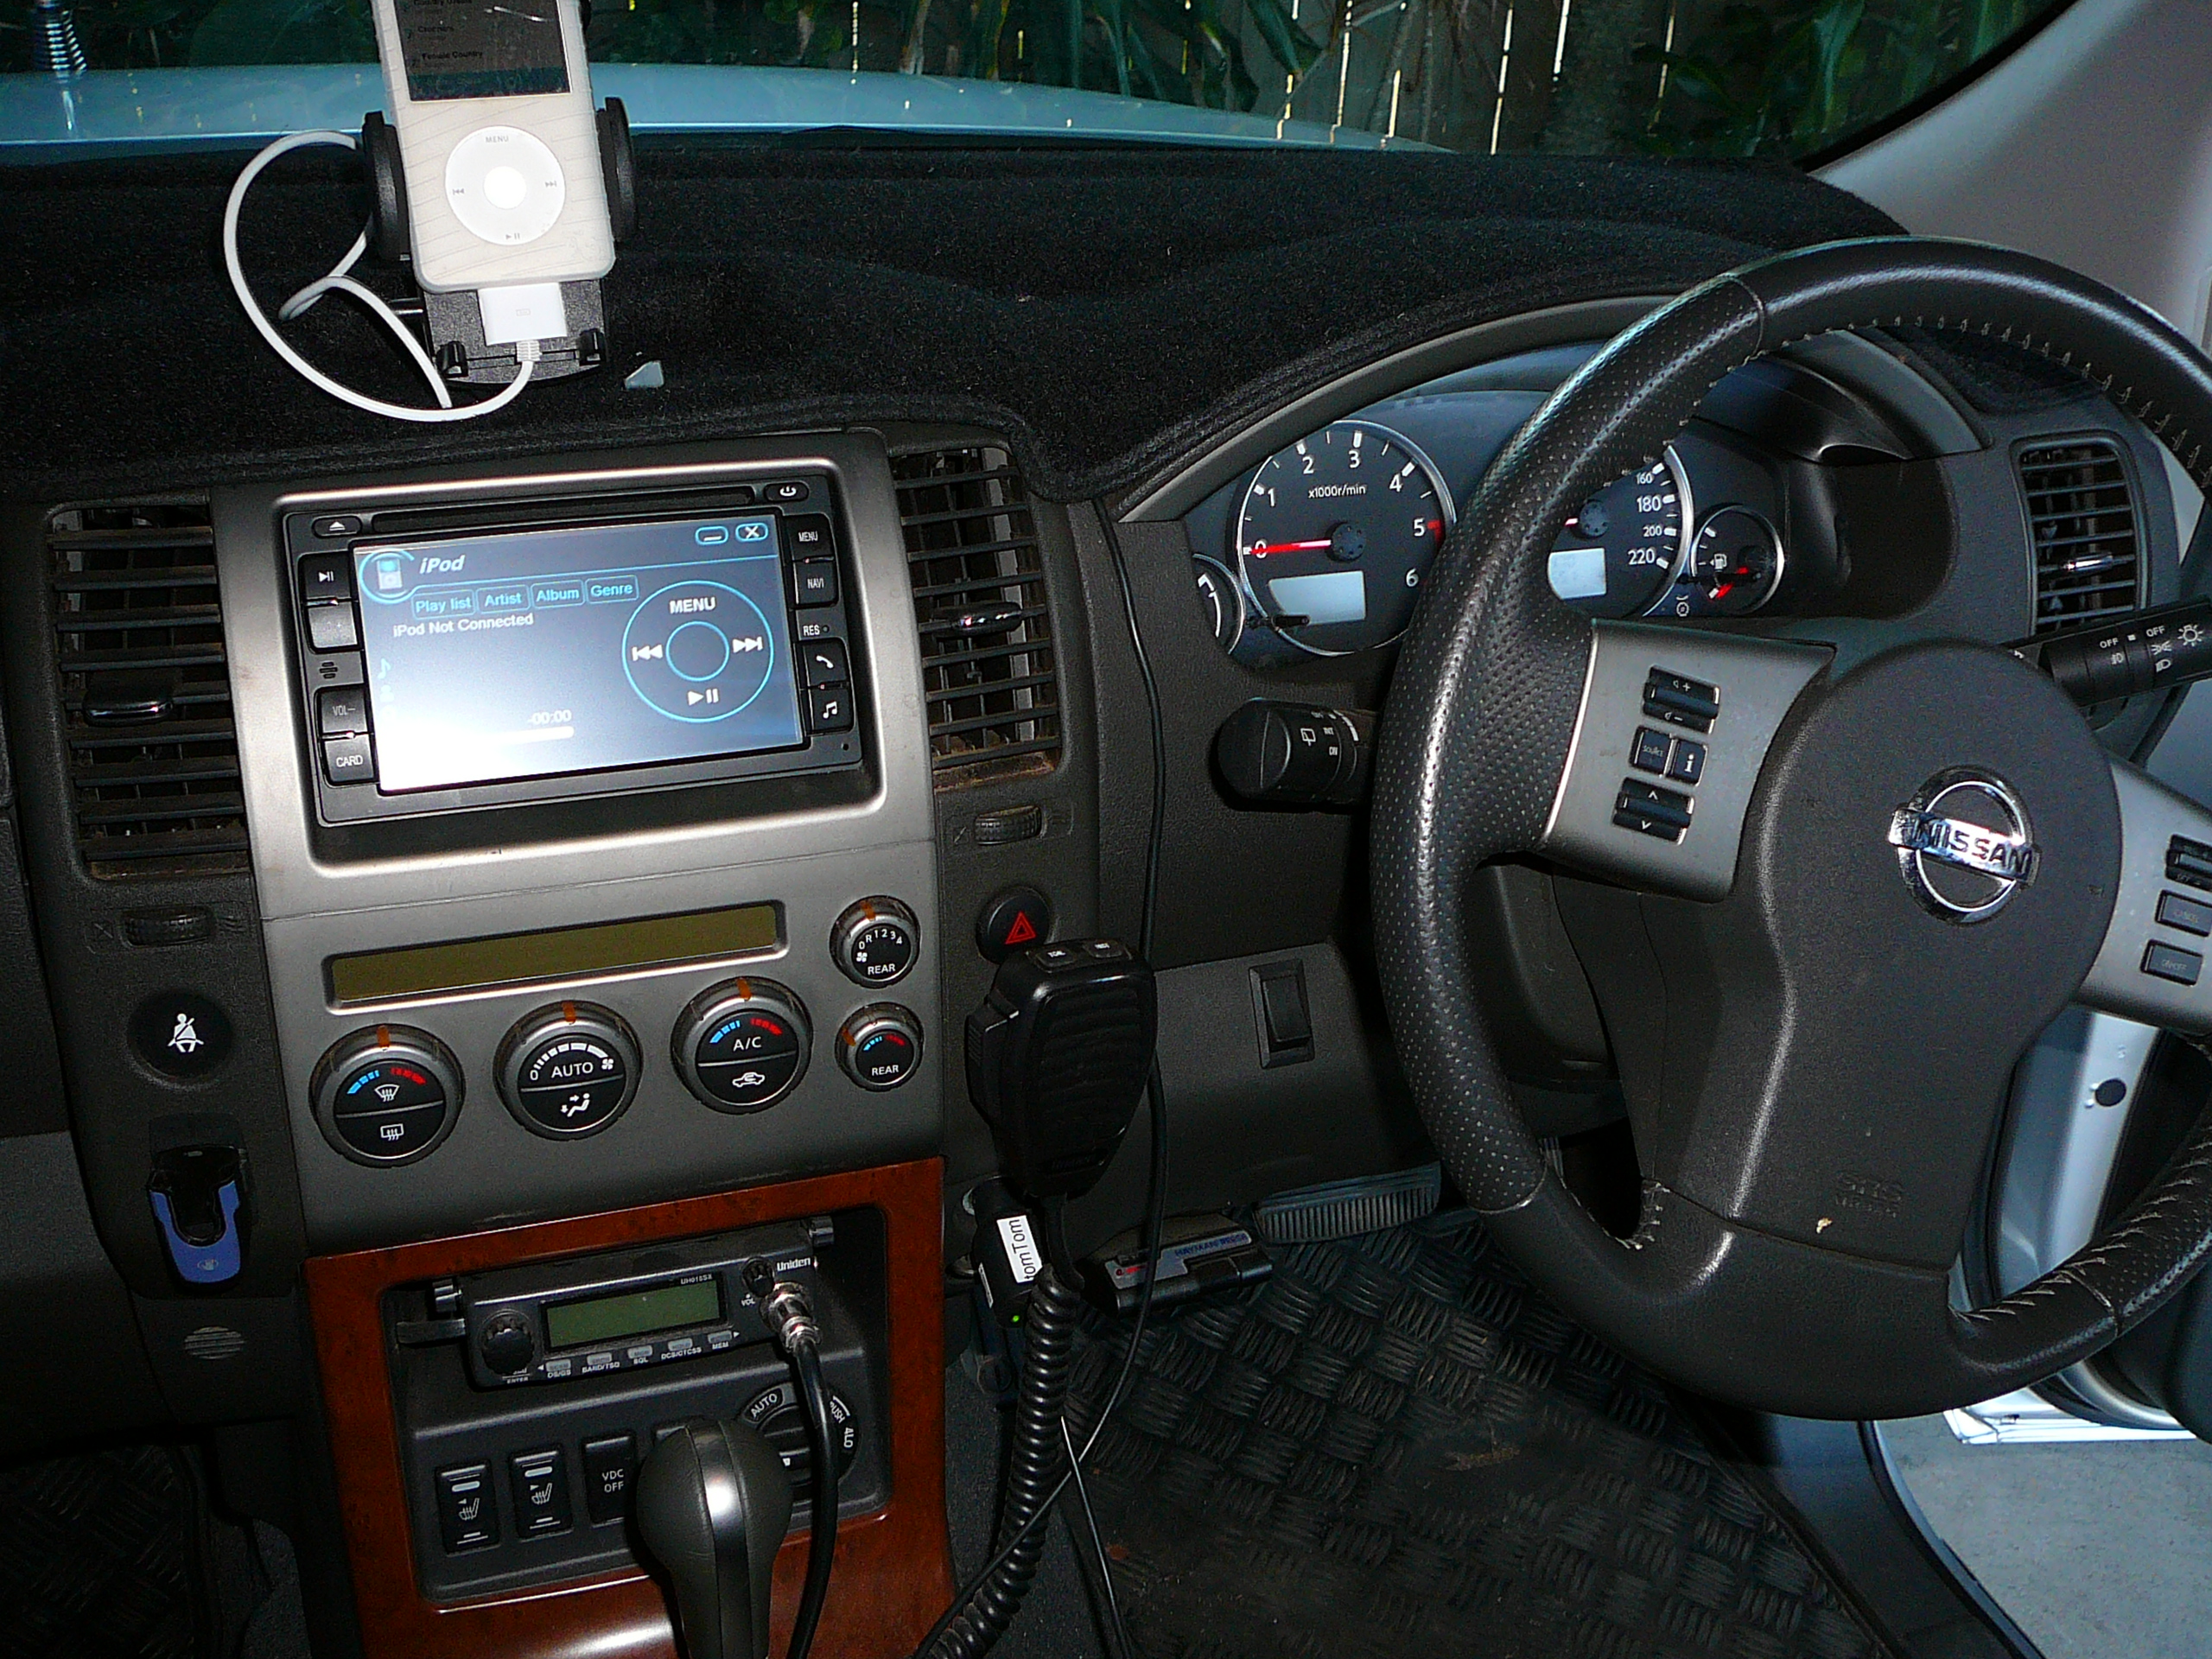 Nissan Pathfinder, Opal GPS Navigation Unit